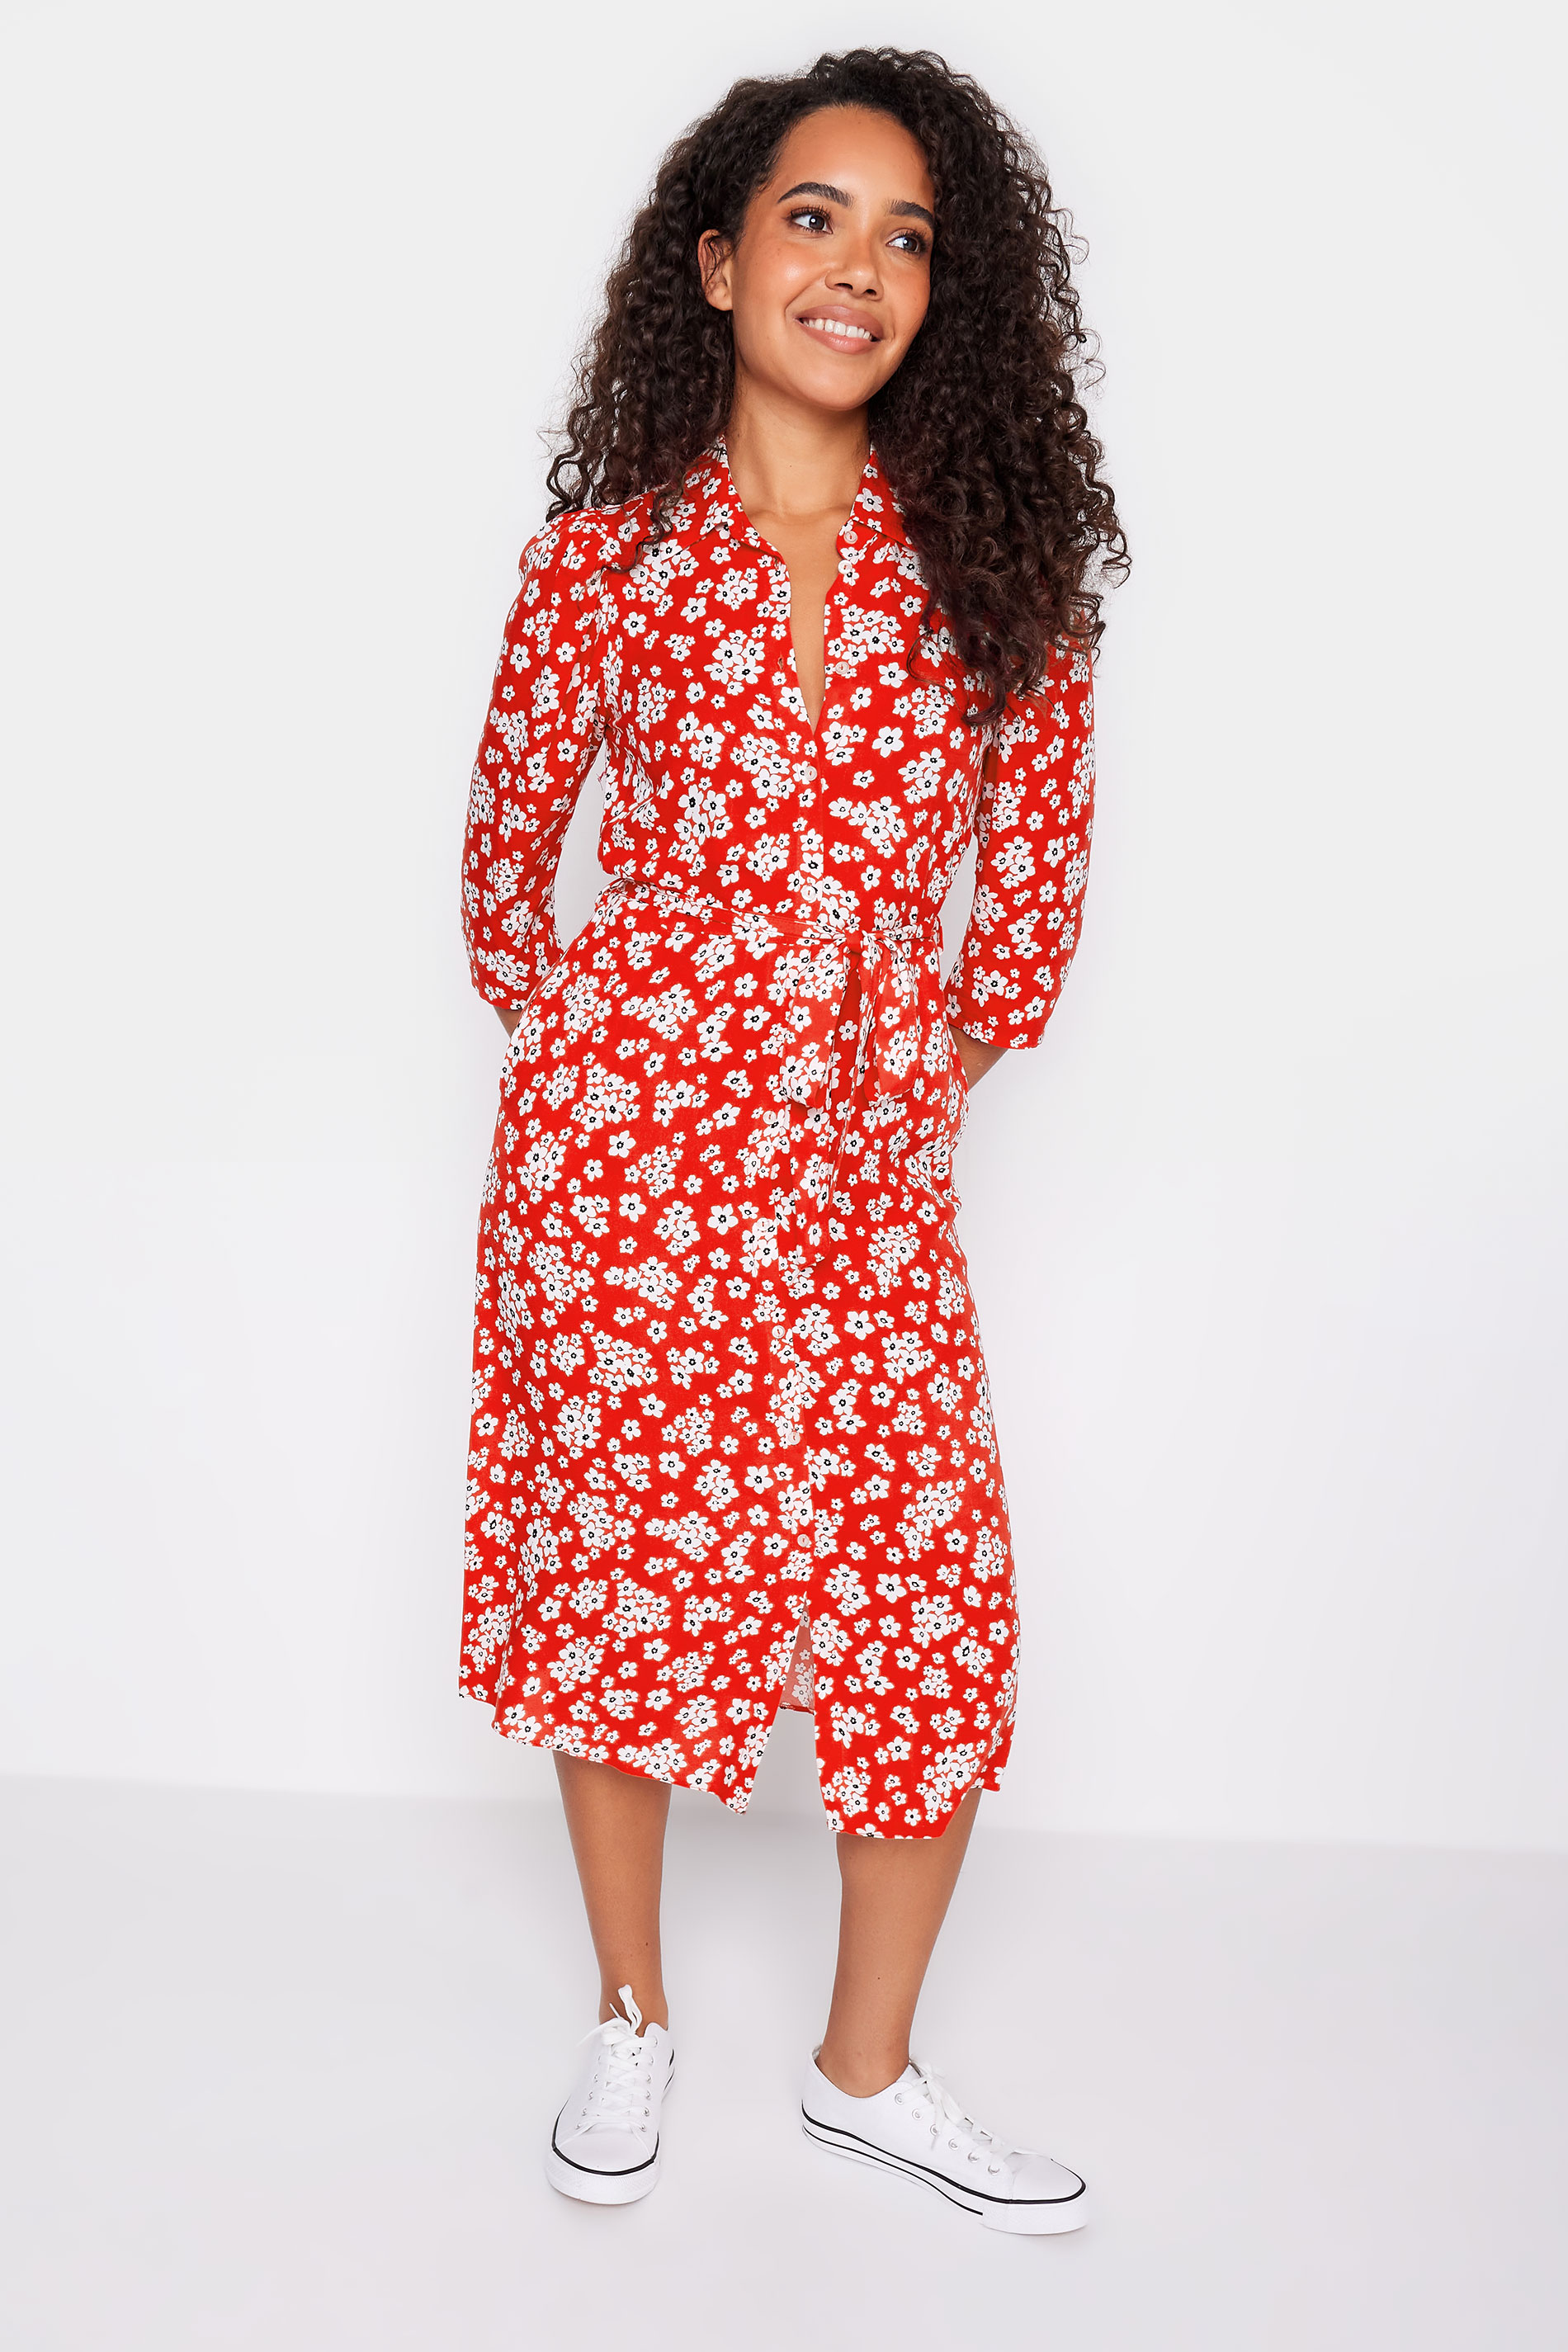 M&Co Red Floral Print Button Through Midi Dress | M&Co 2